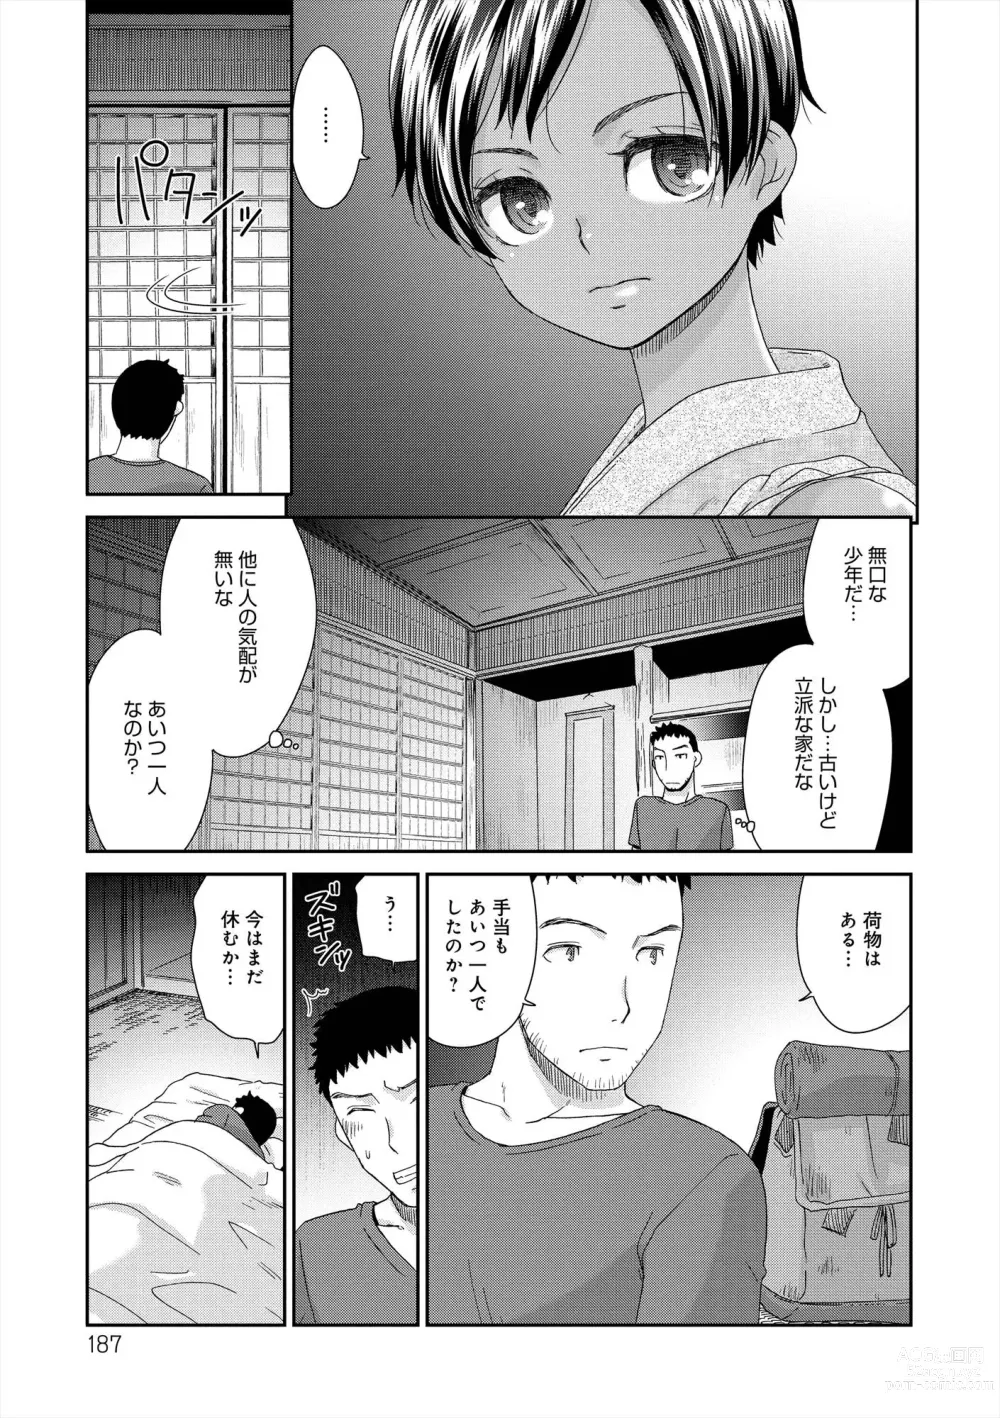 Page 188 of manga The Innocent Porno